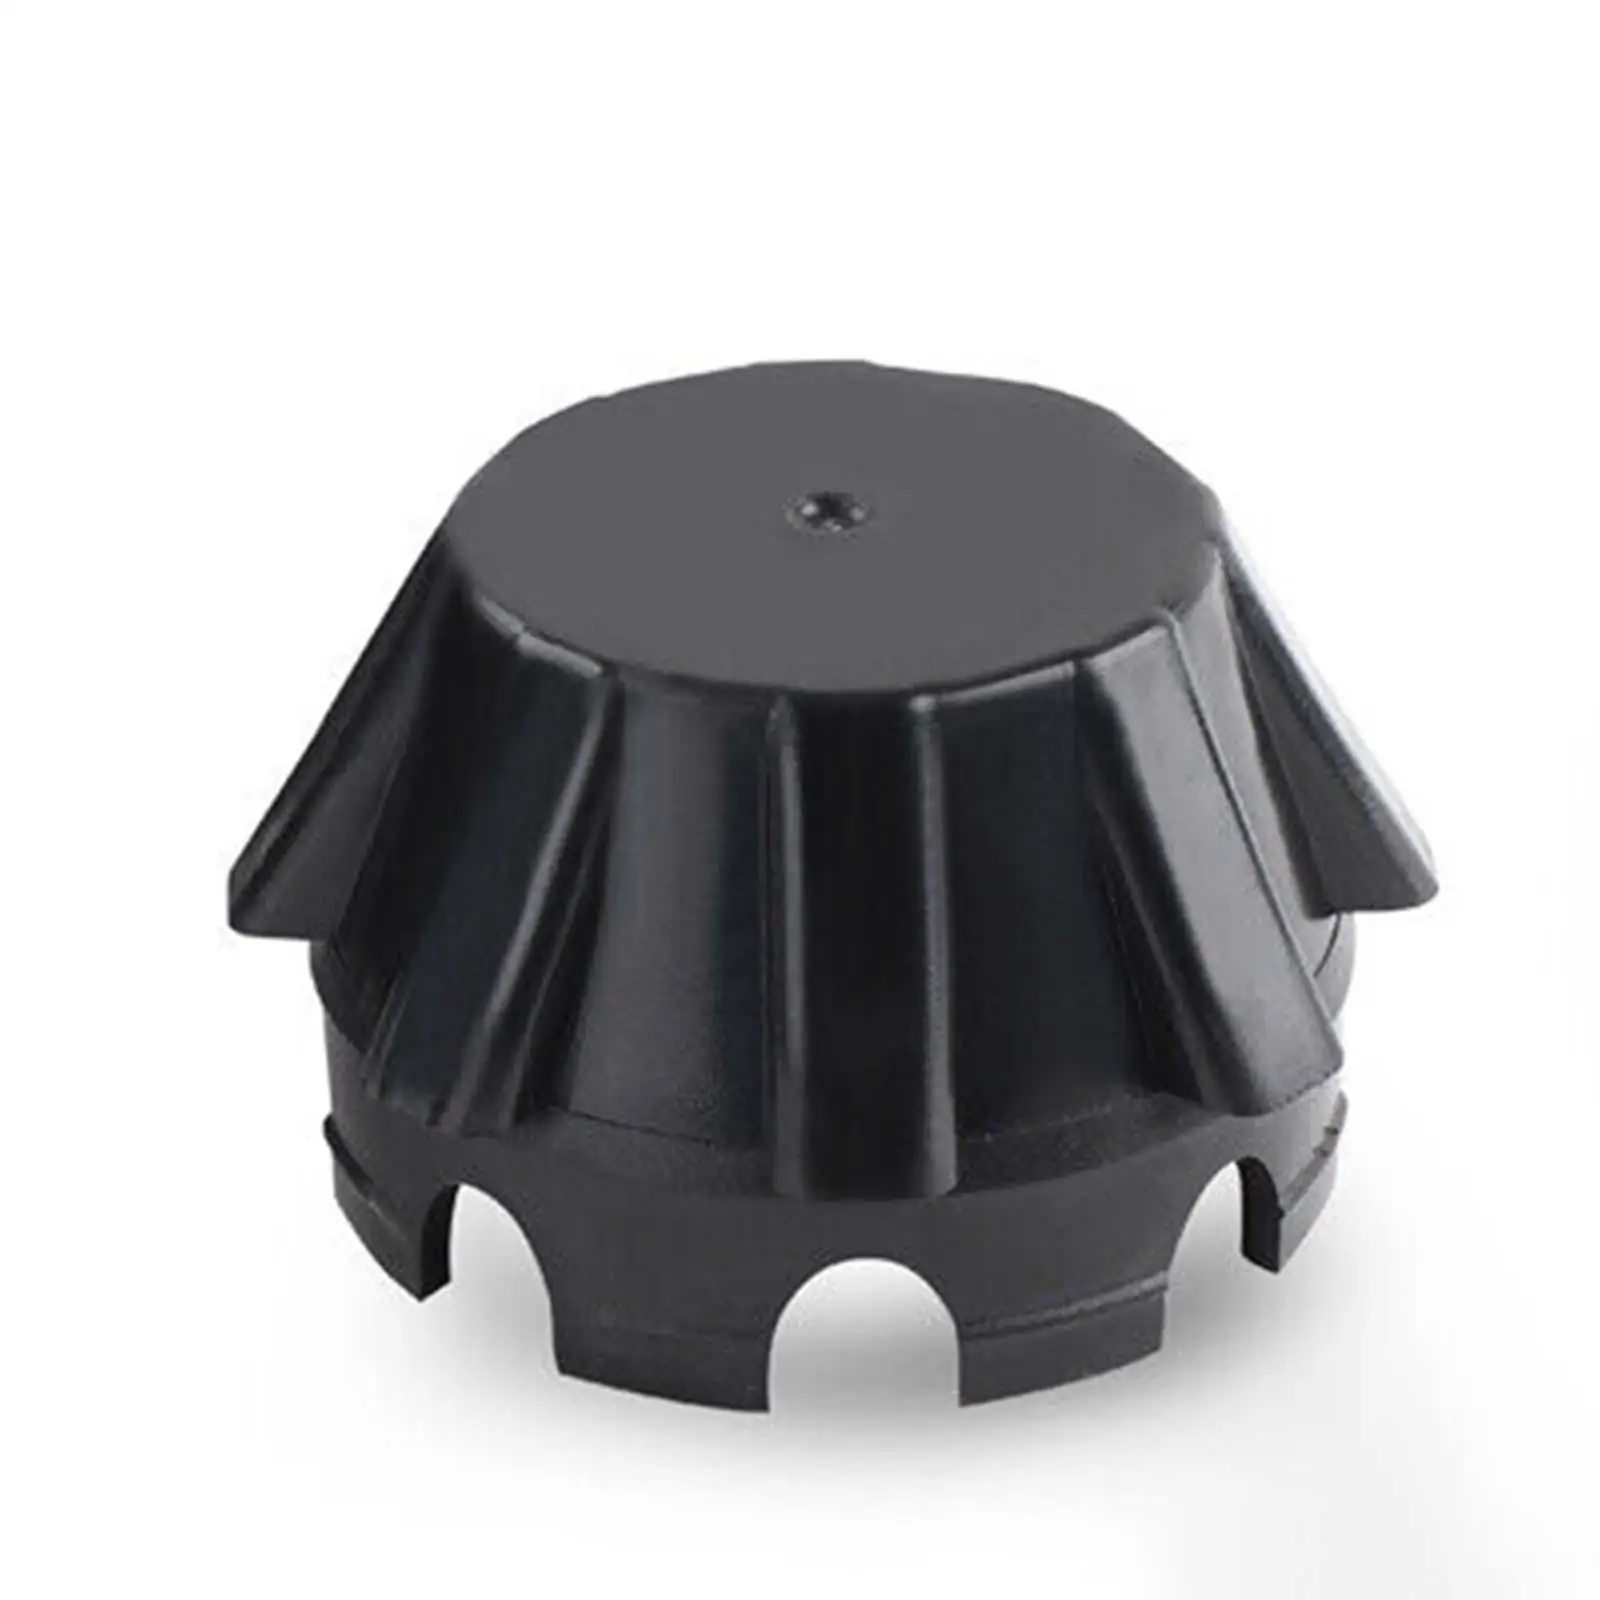 4x Wheel Center Hub Caps Cover Replaces Accessory for Kawasaki Krx 1000 Easy Installation Repair Part Quality Durable Premium